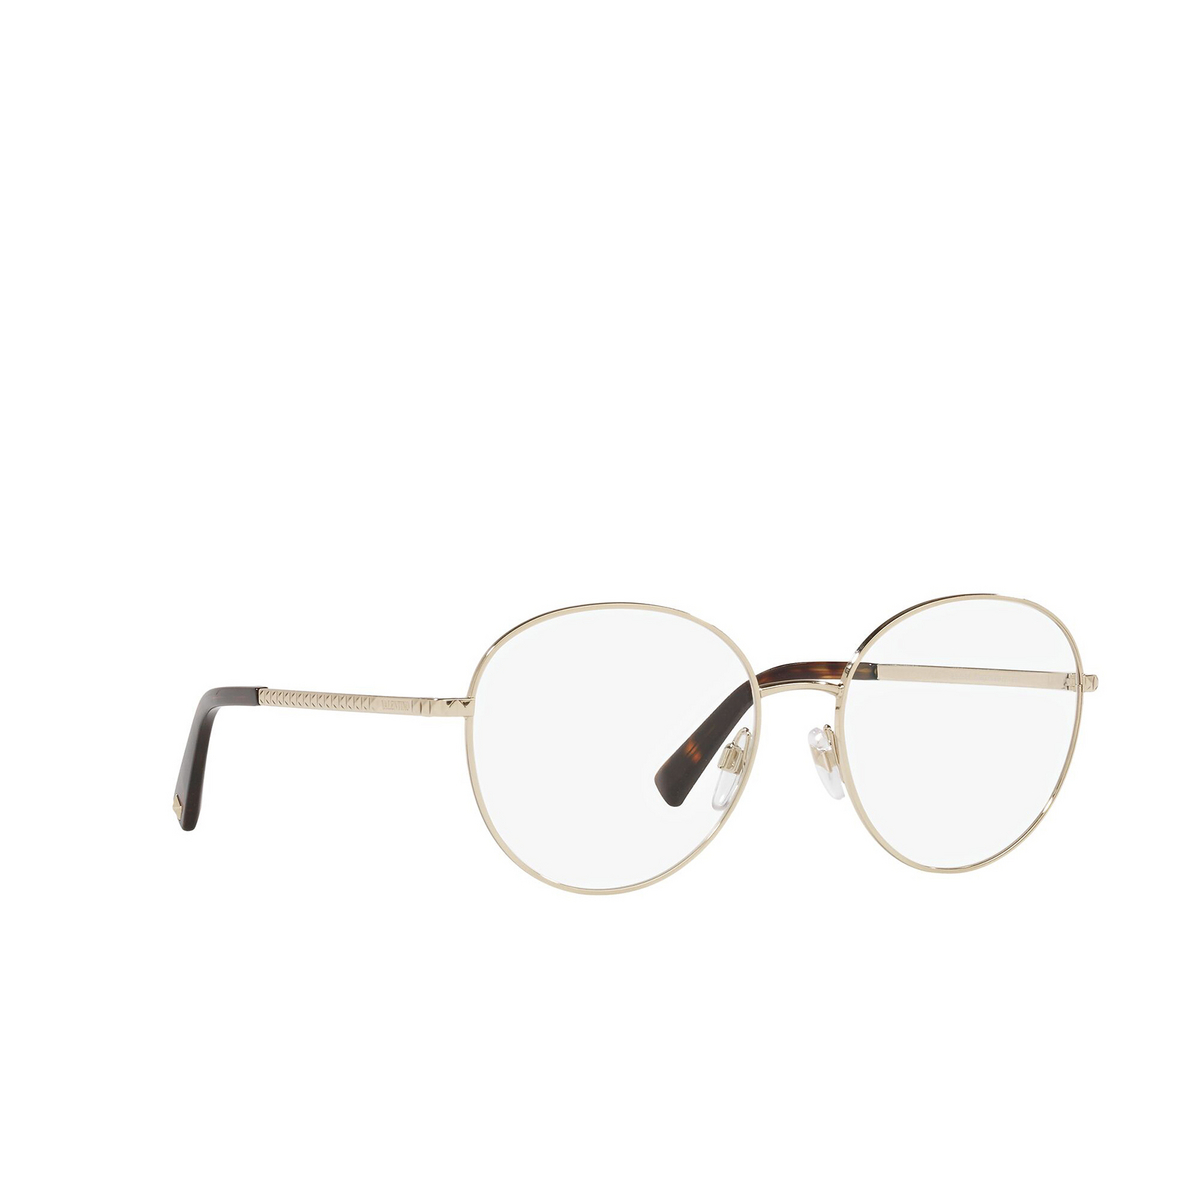 Valentino® Round Sunglasses: VA1025 color Light Gold 3003 - three-quarters view.